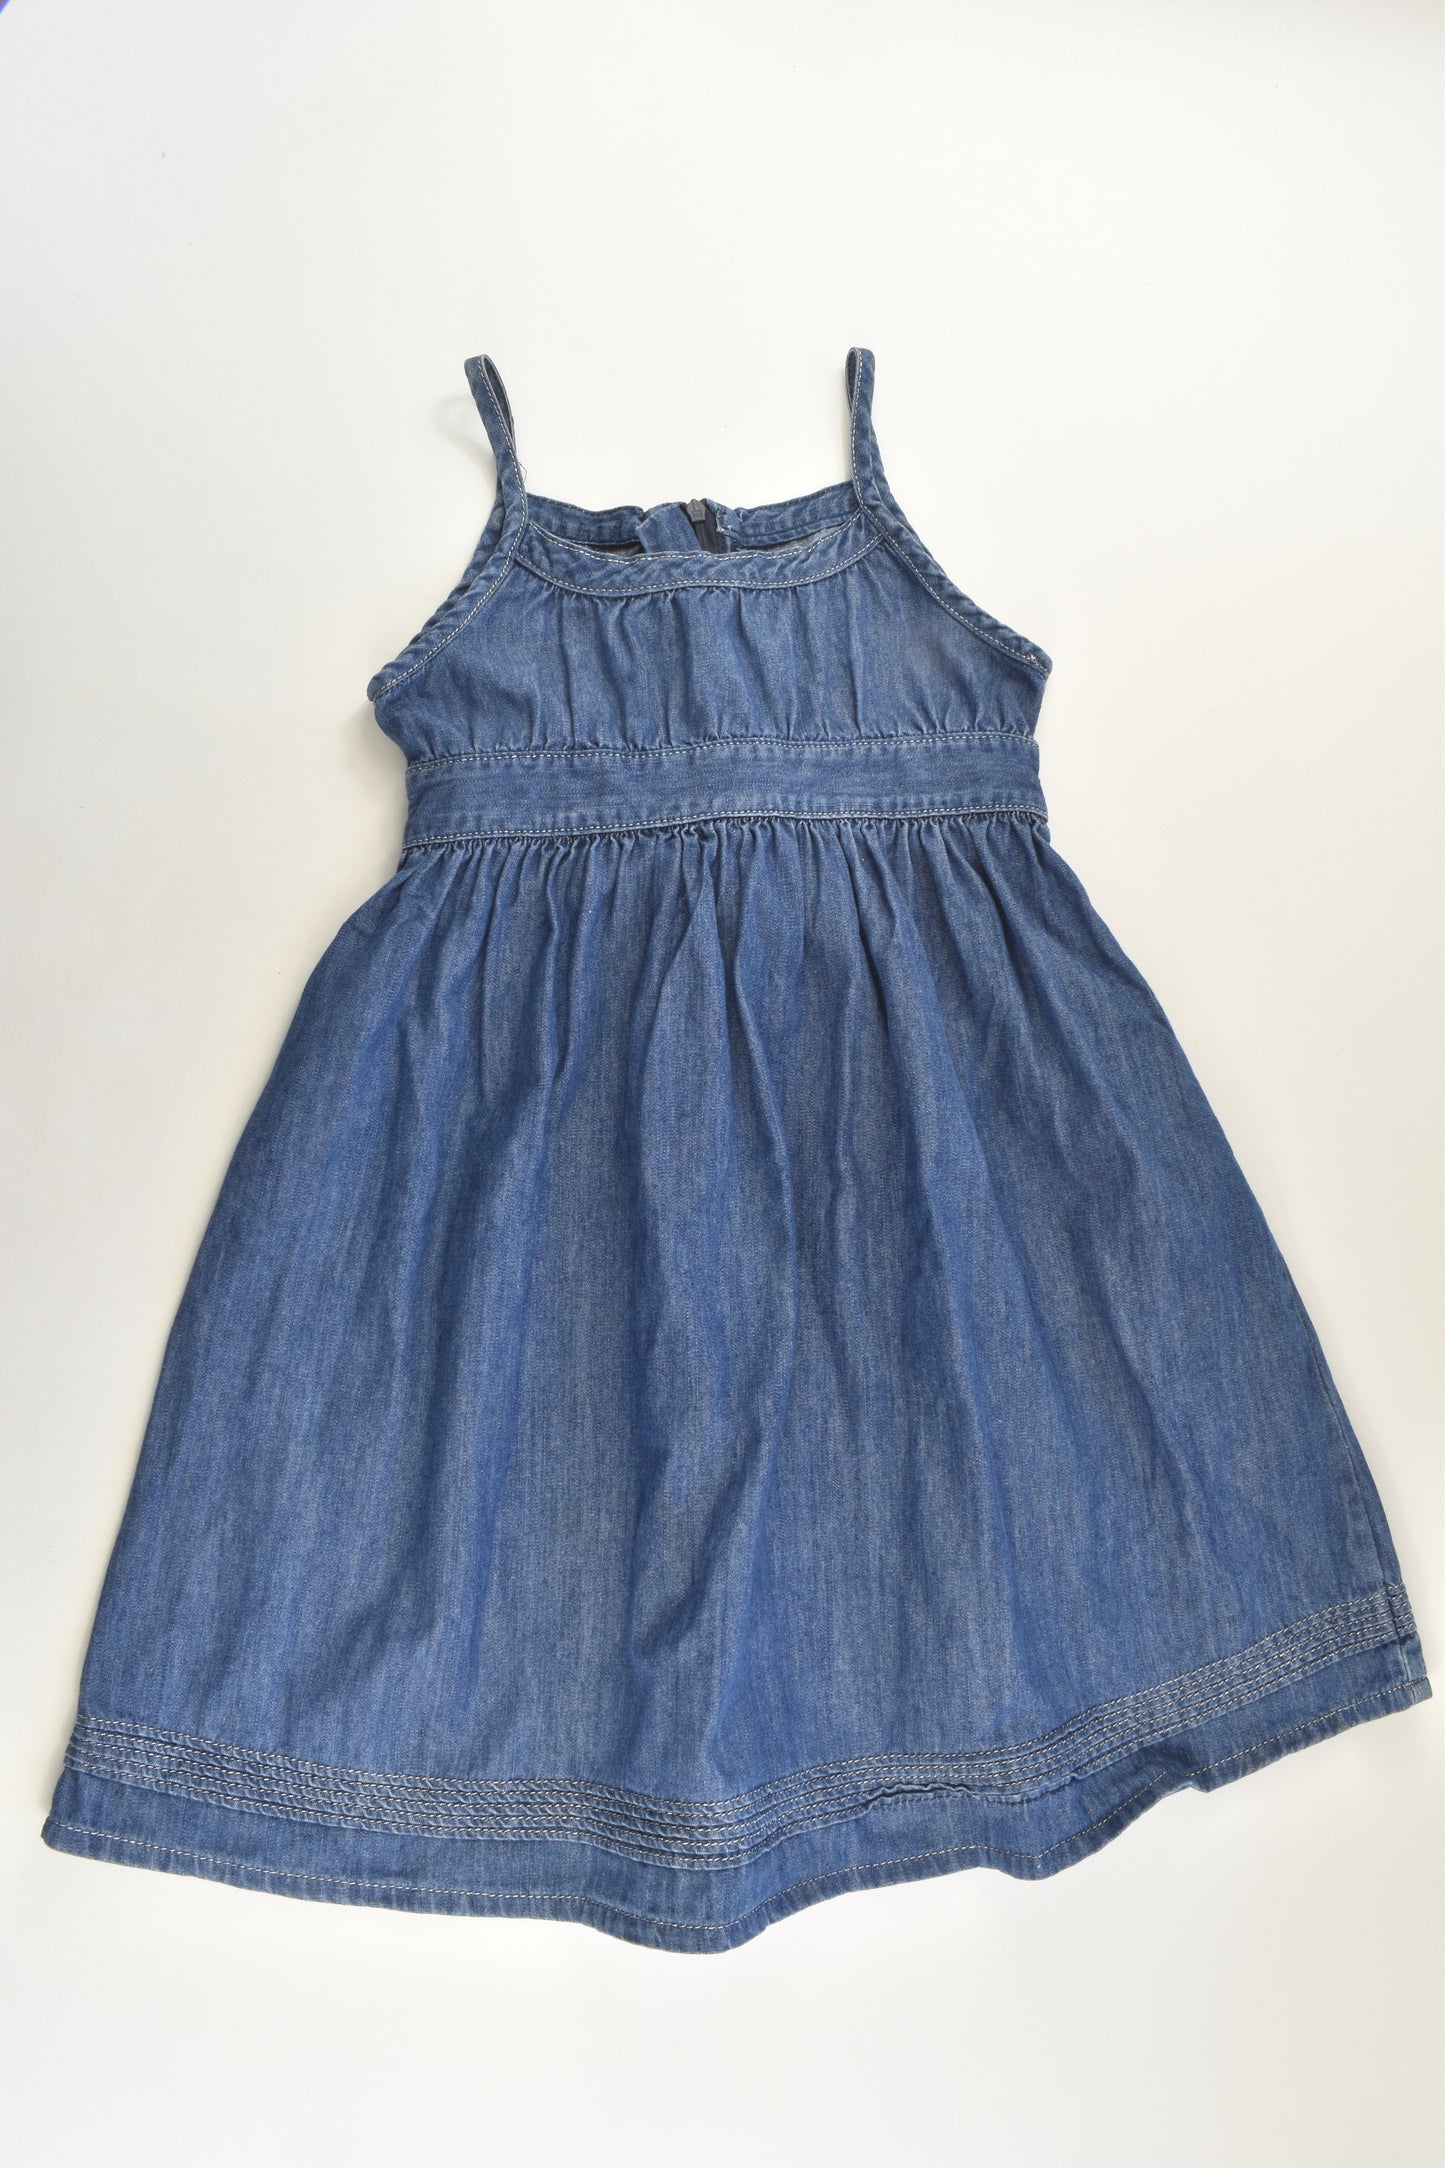 H&M Size 7-8 (128 cm) Denim Dress